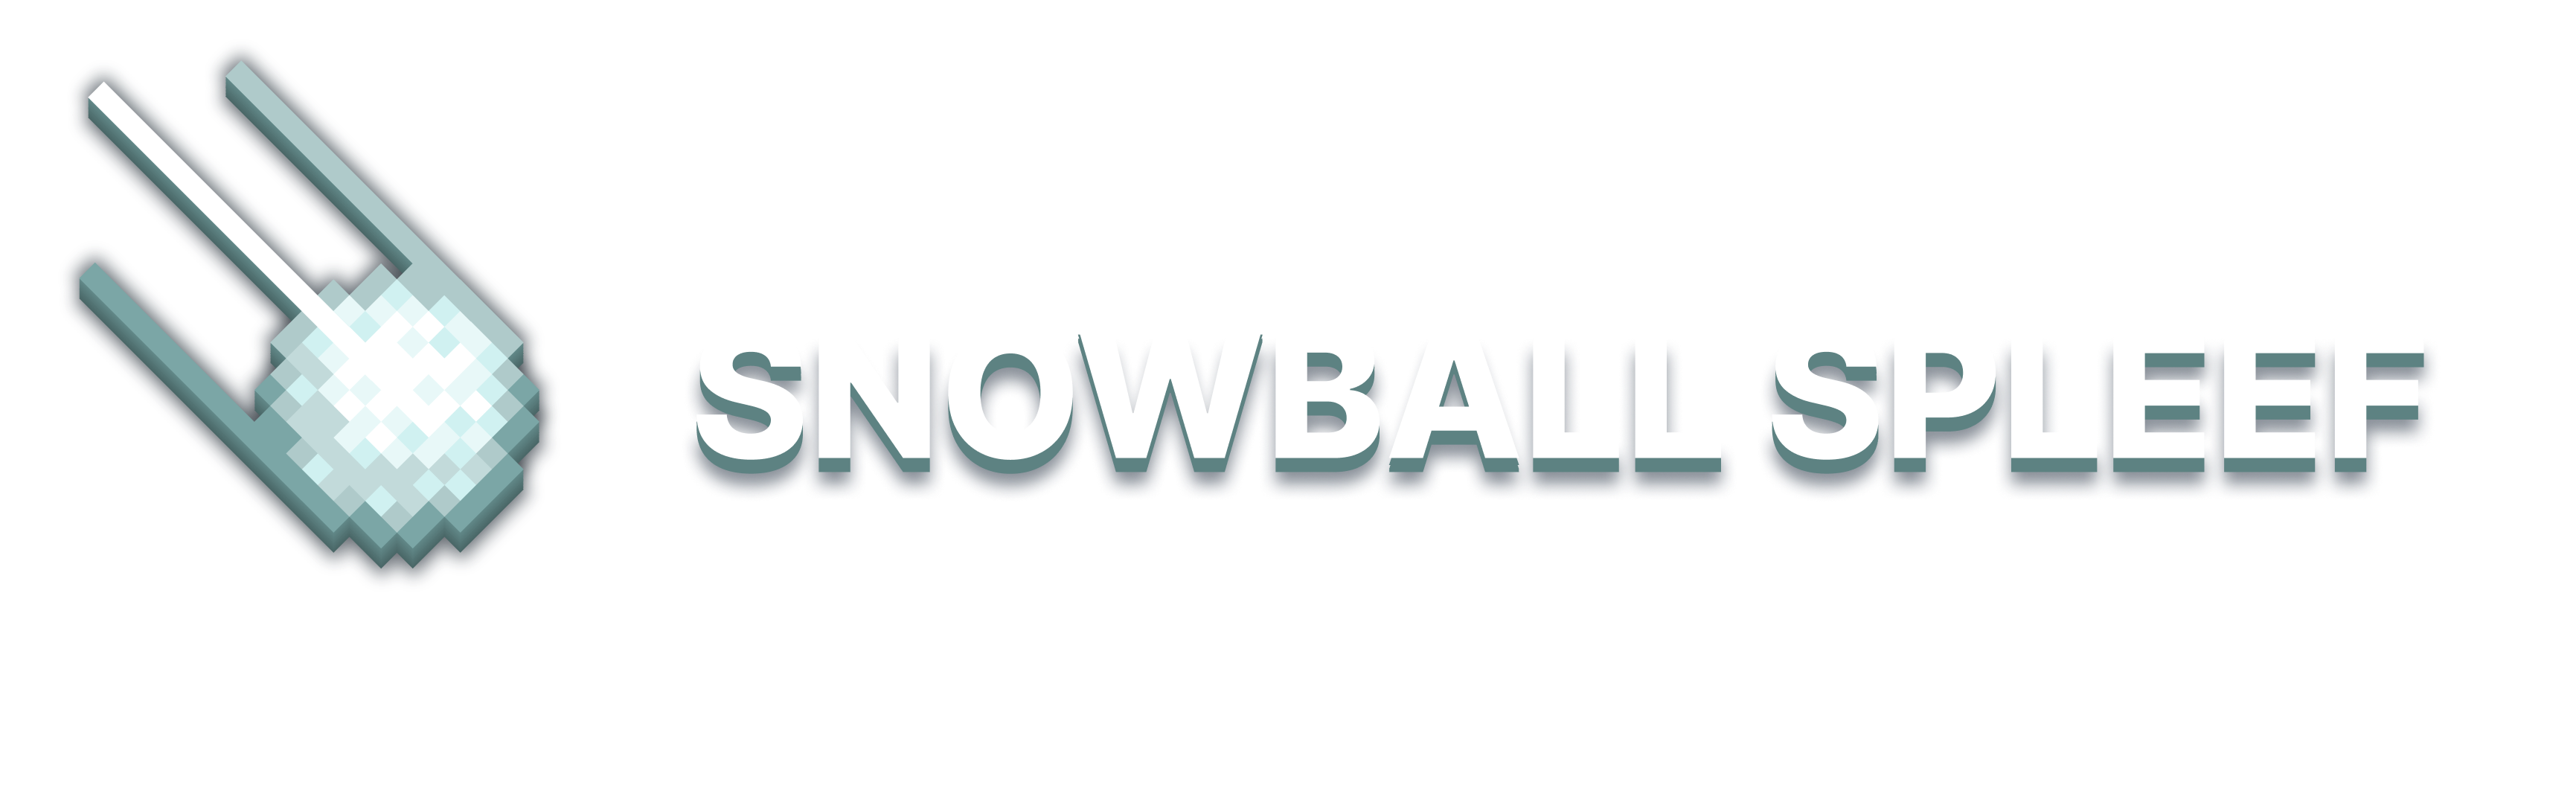 Snowball Spleef